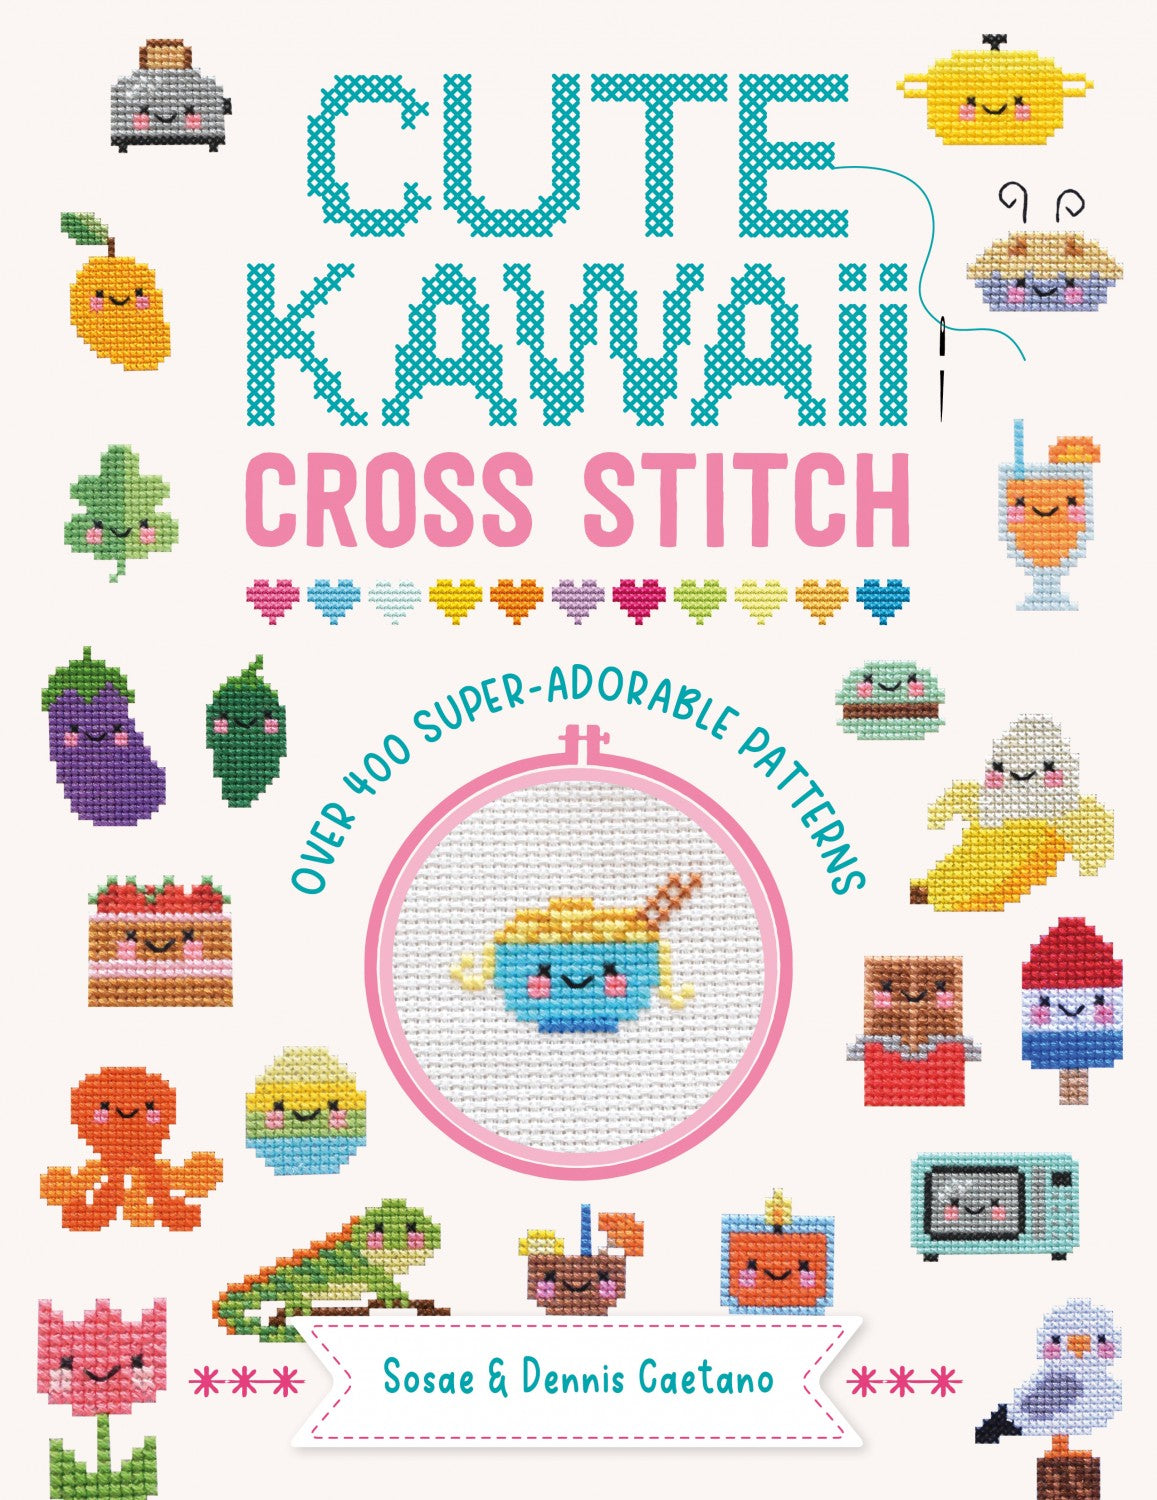 Cute Kawaii Cross Stitch Book